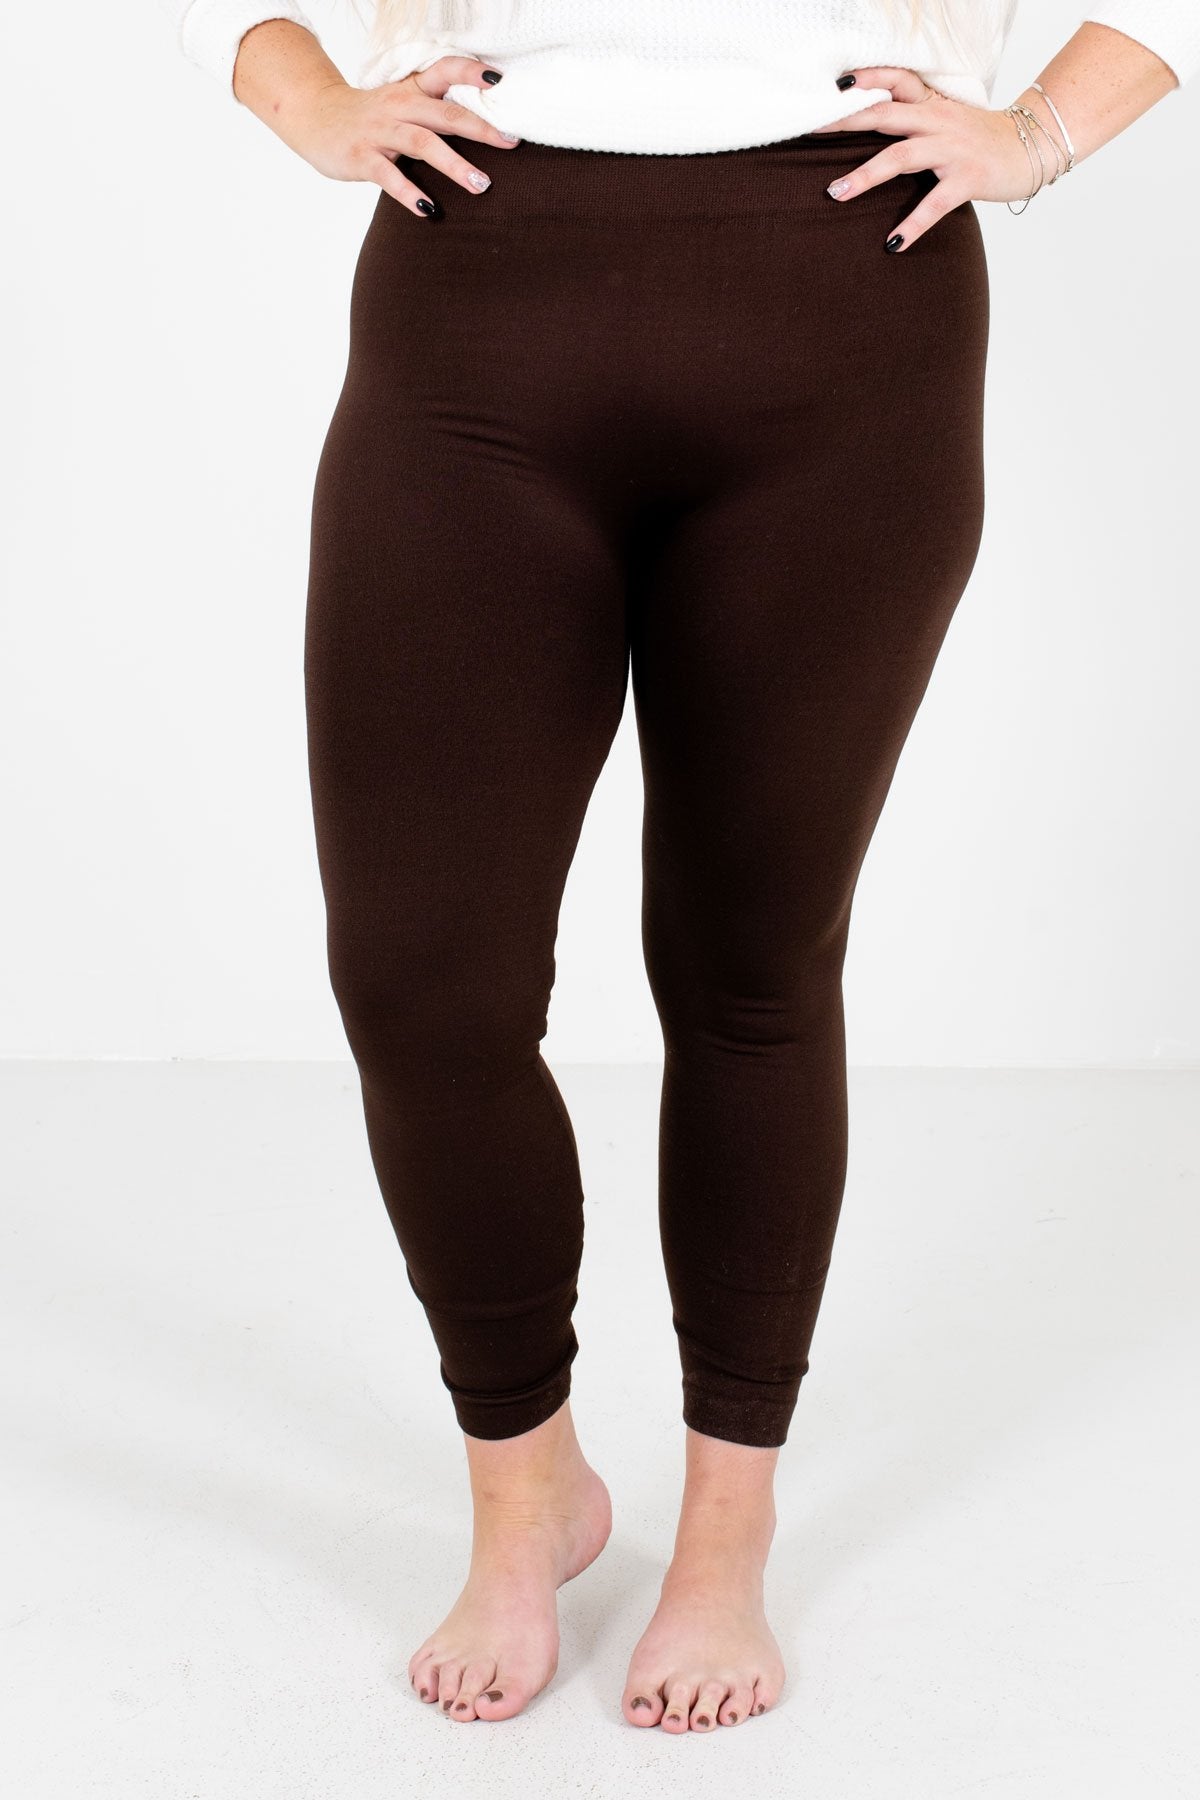 Thermal leggings 380den curvy in dark brown, 4.99€